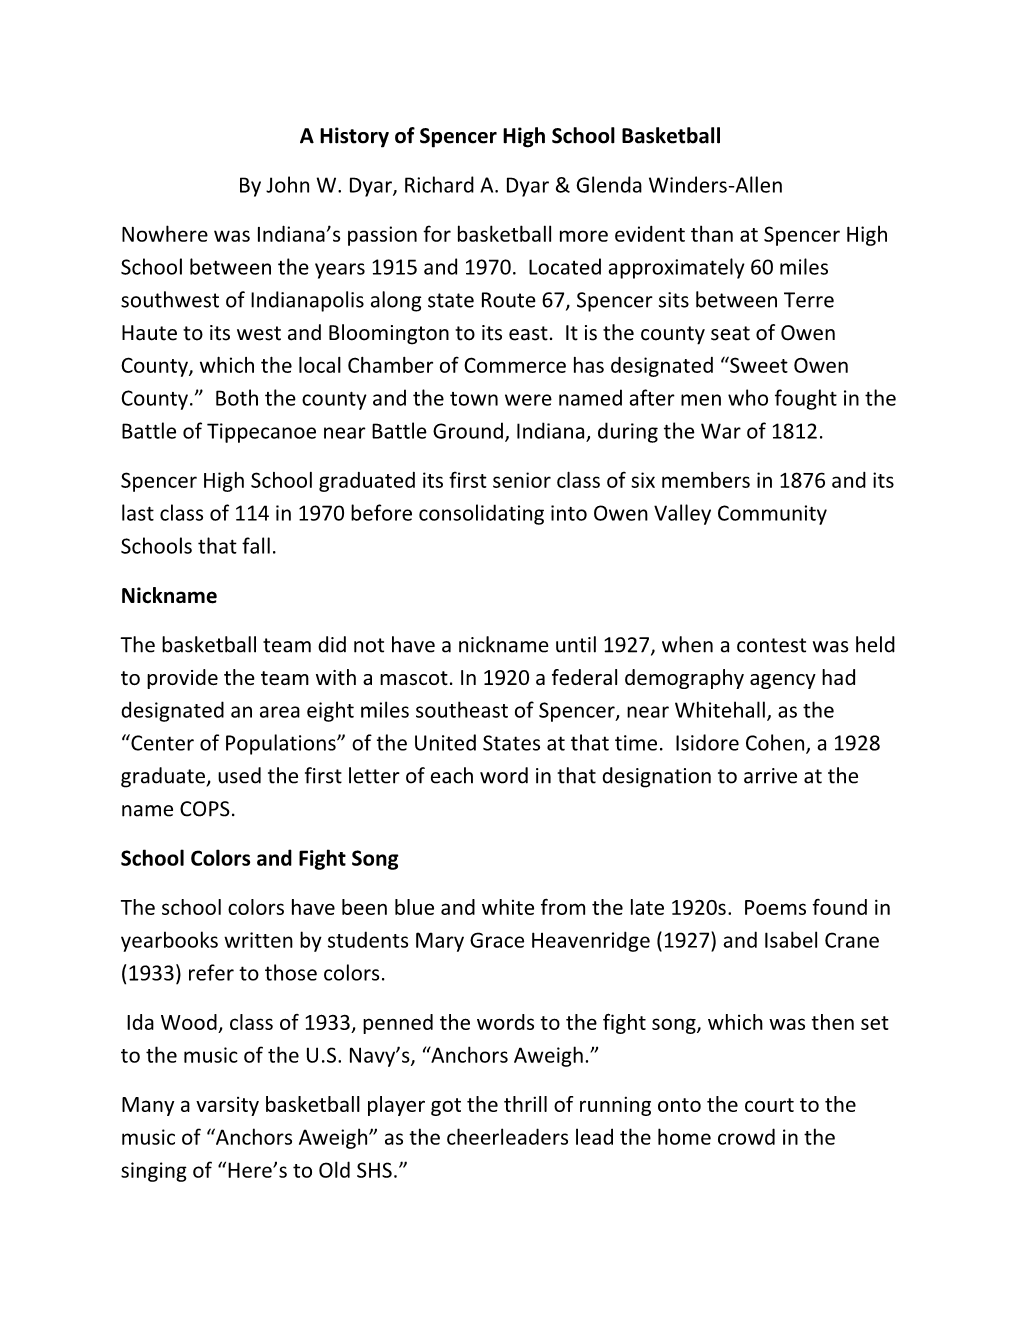 A History of Spencer High School Basketball by John W. Dyar, Richard A. Dyar & Glenda Winders-Allen Nowhere Was Indiana's